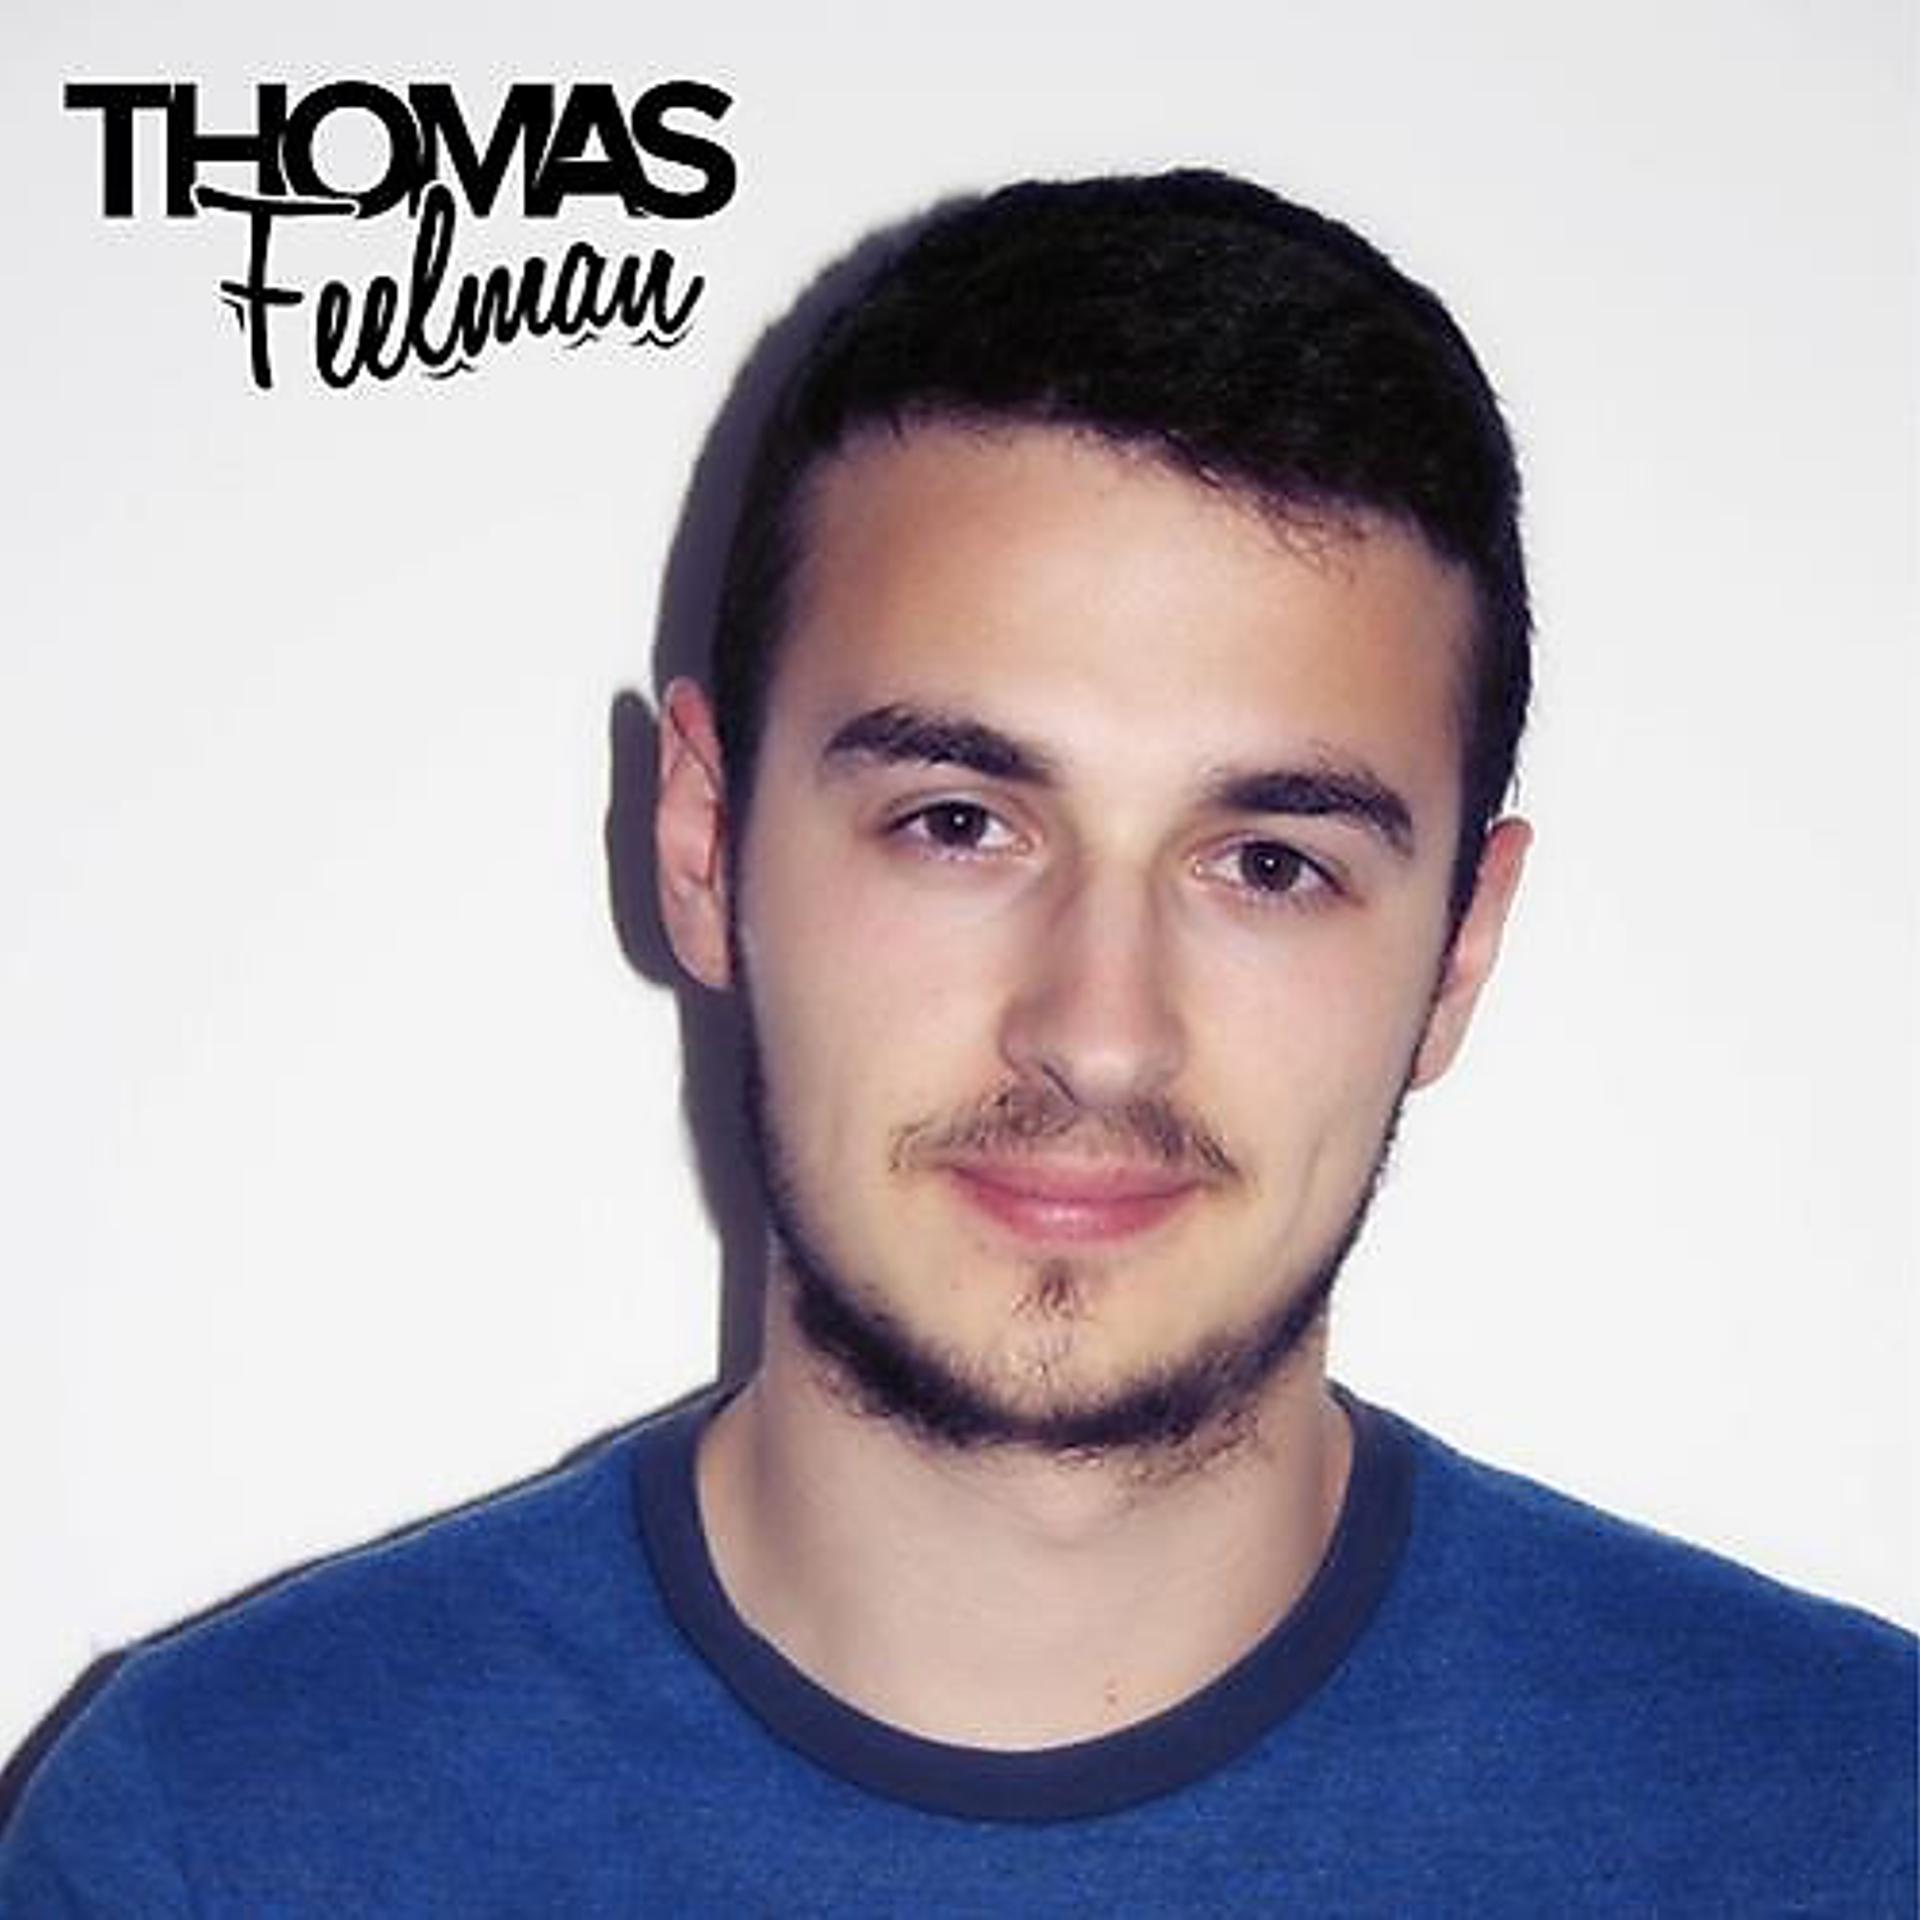 Thomas feelman - фото